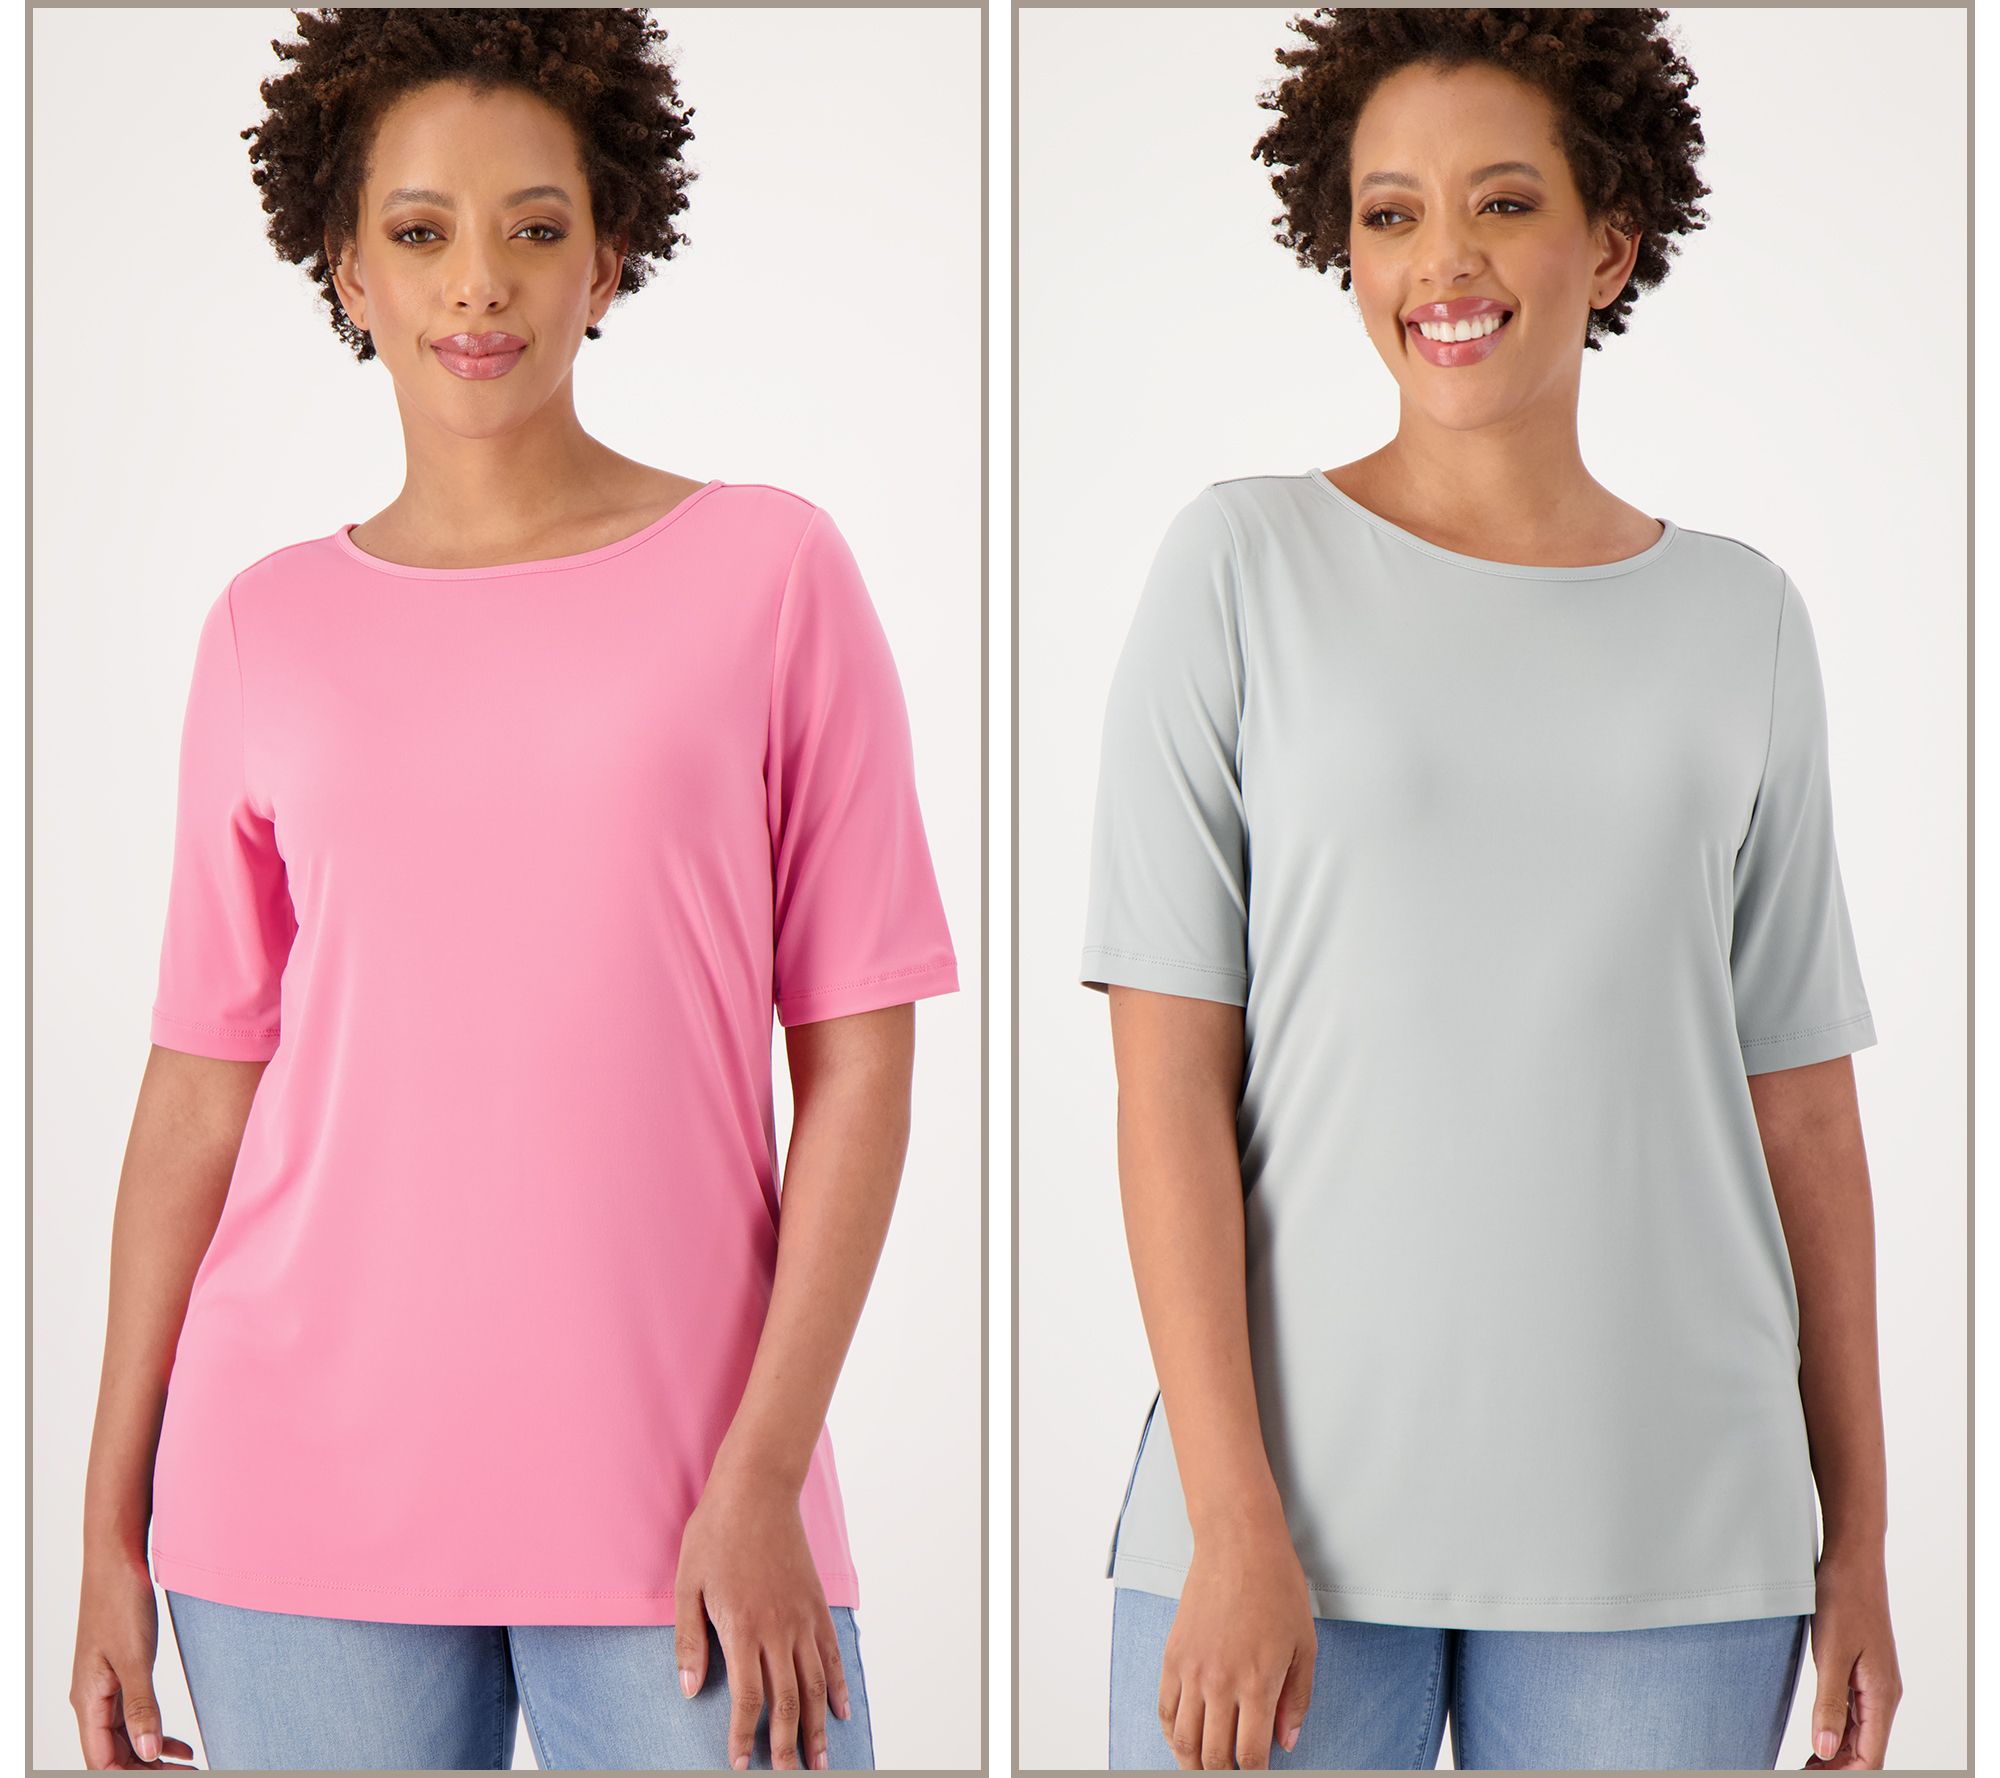 Women's Knit Tops Shirts & Tops